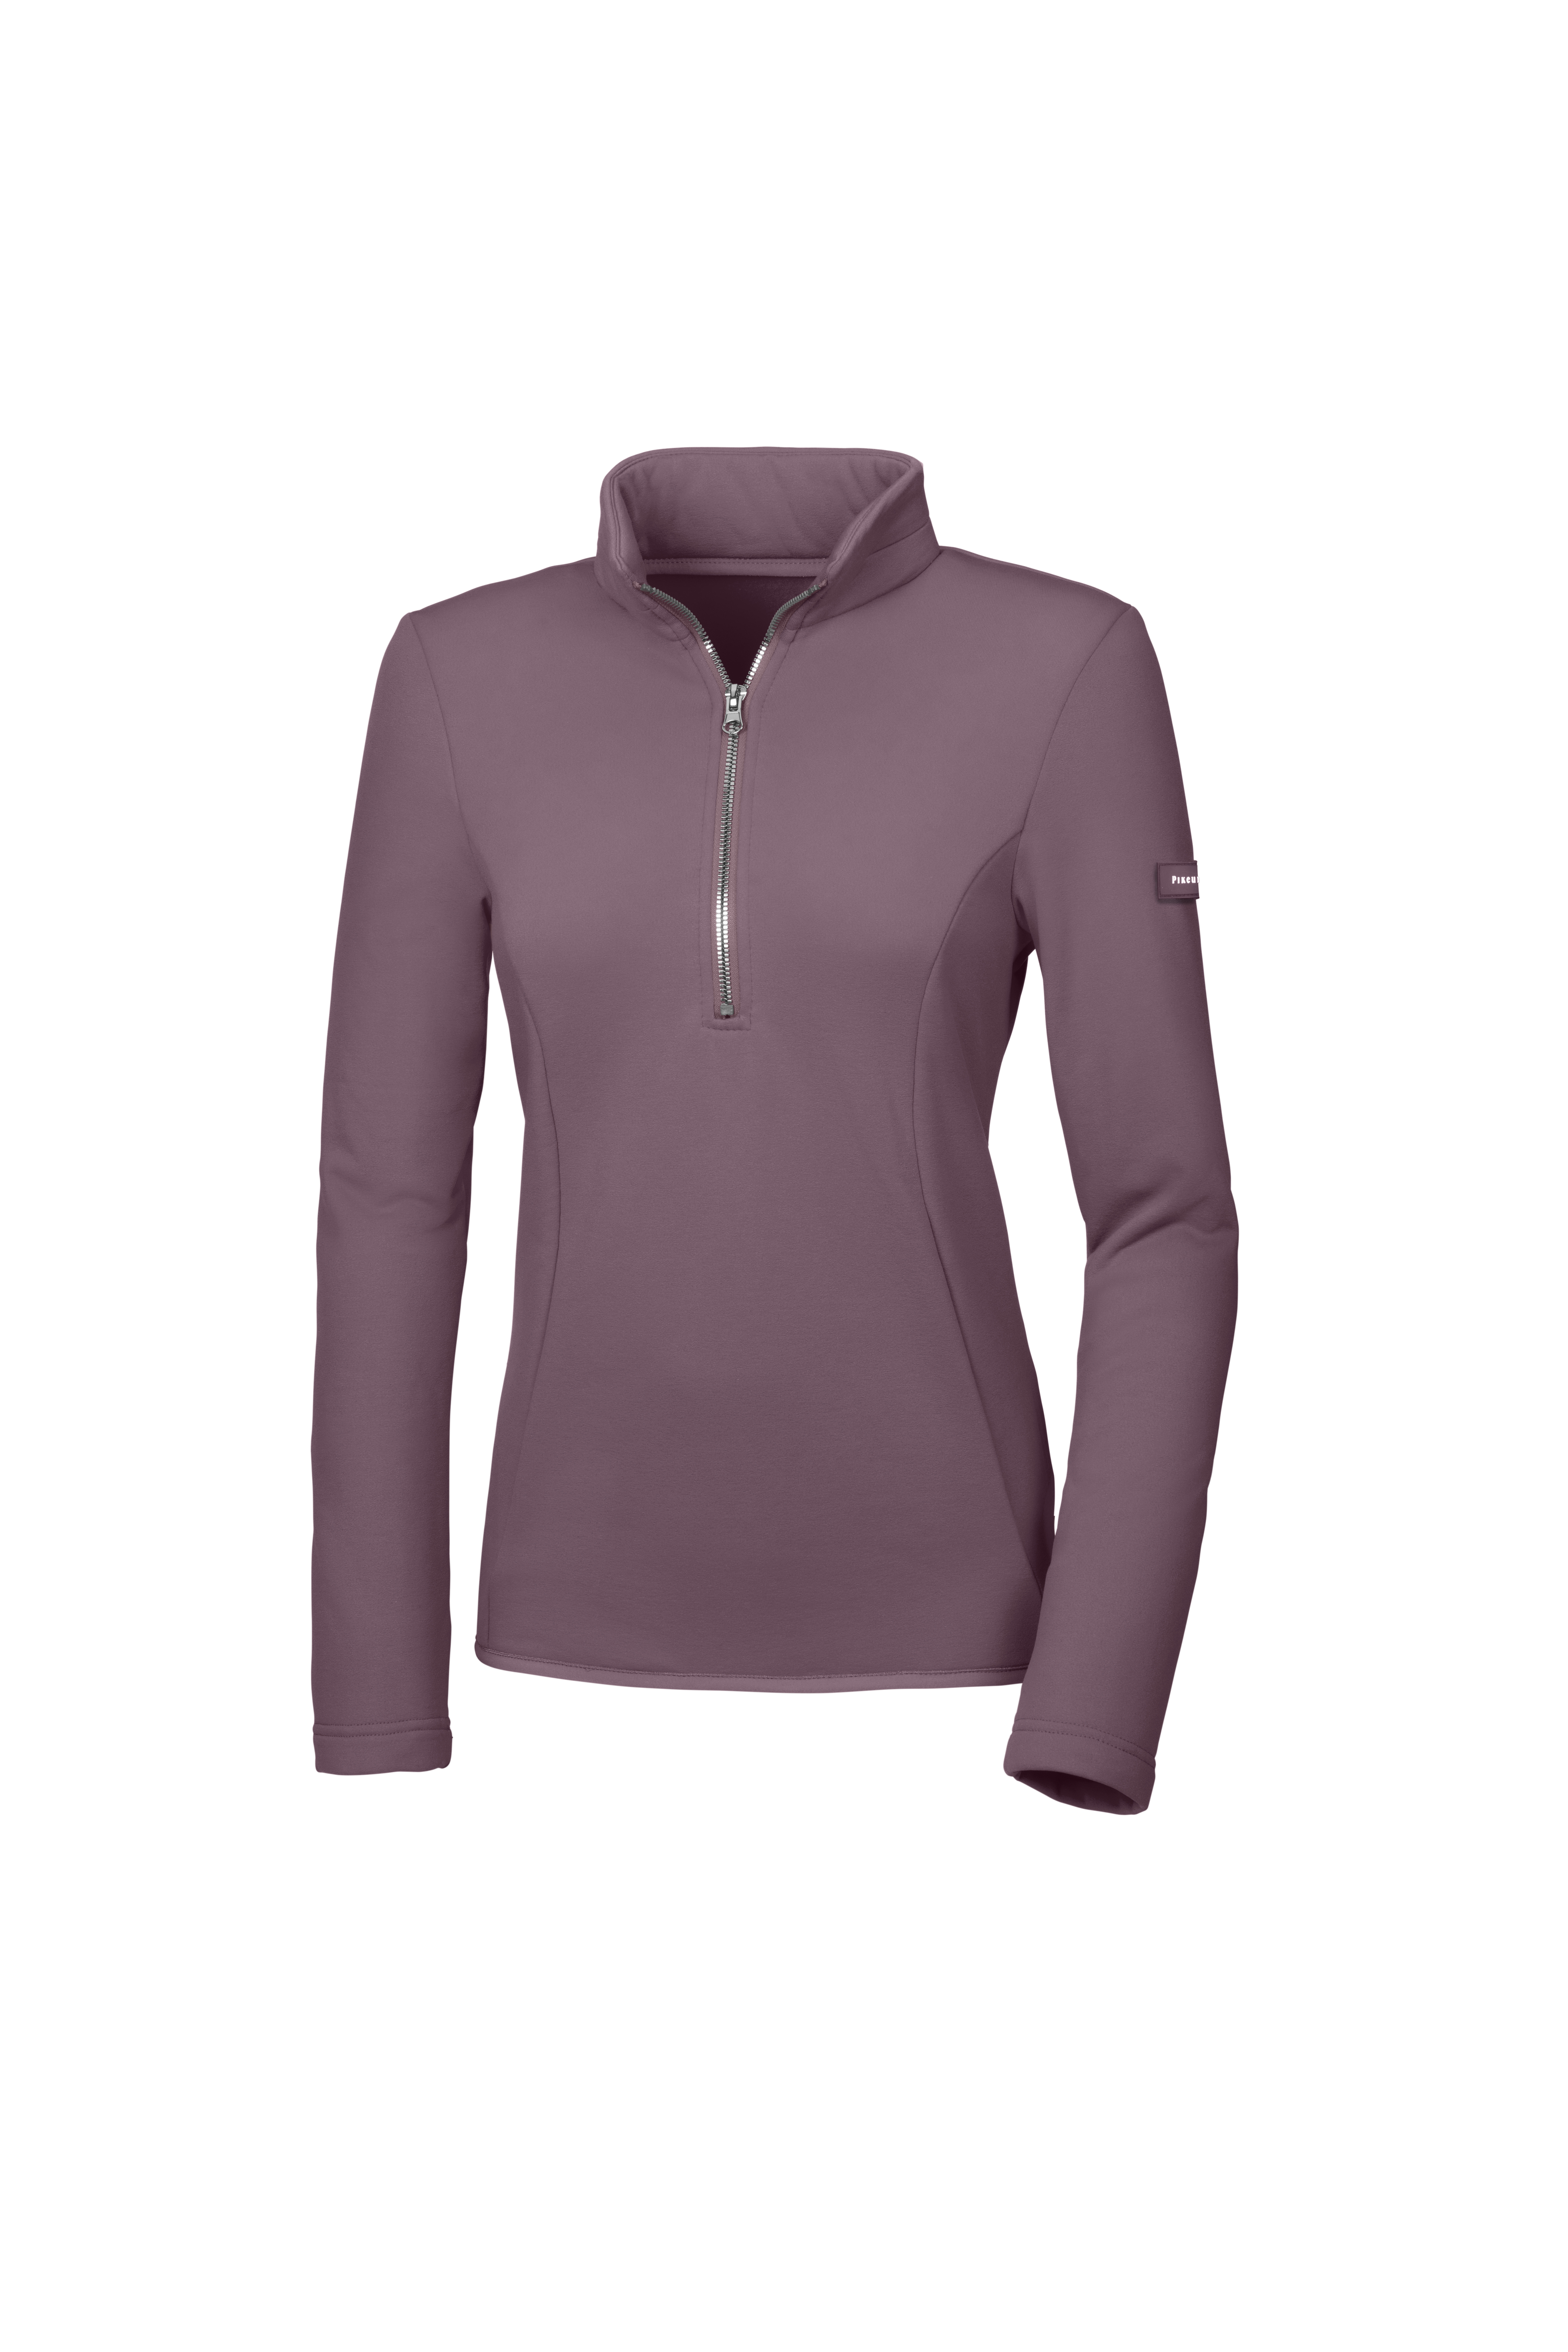 Funktionsshirt DINA, Damen, Sportswear 22, purple grey